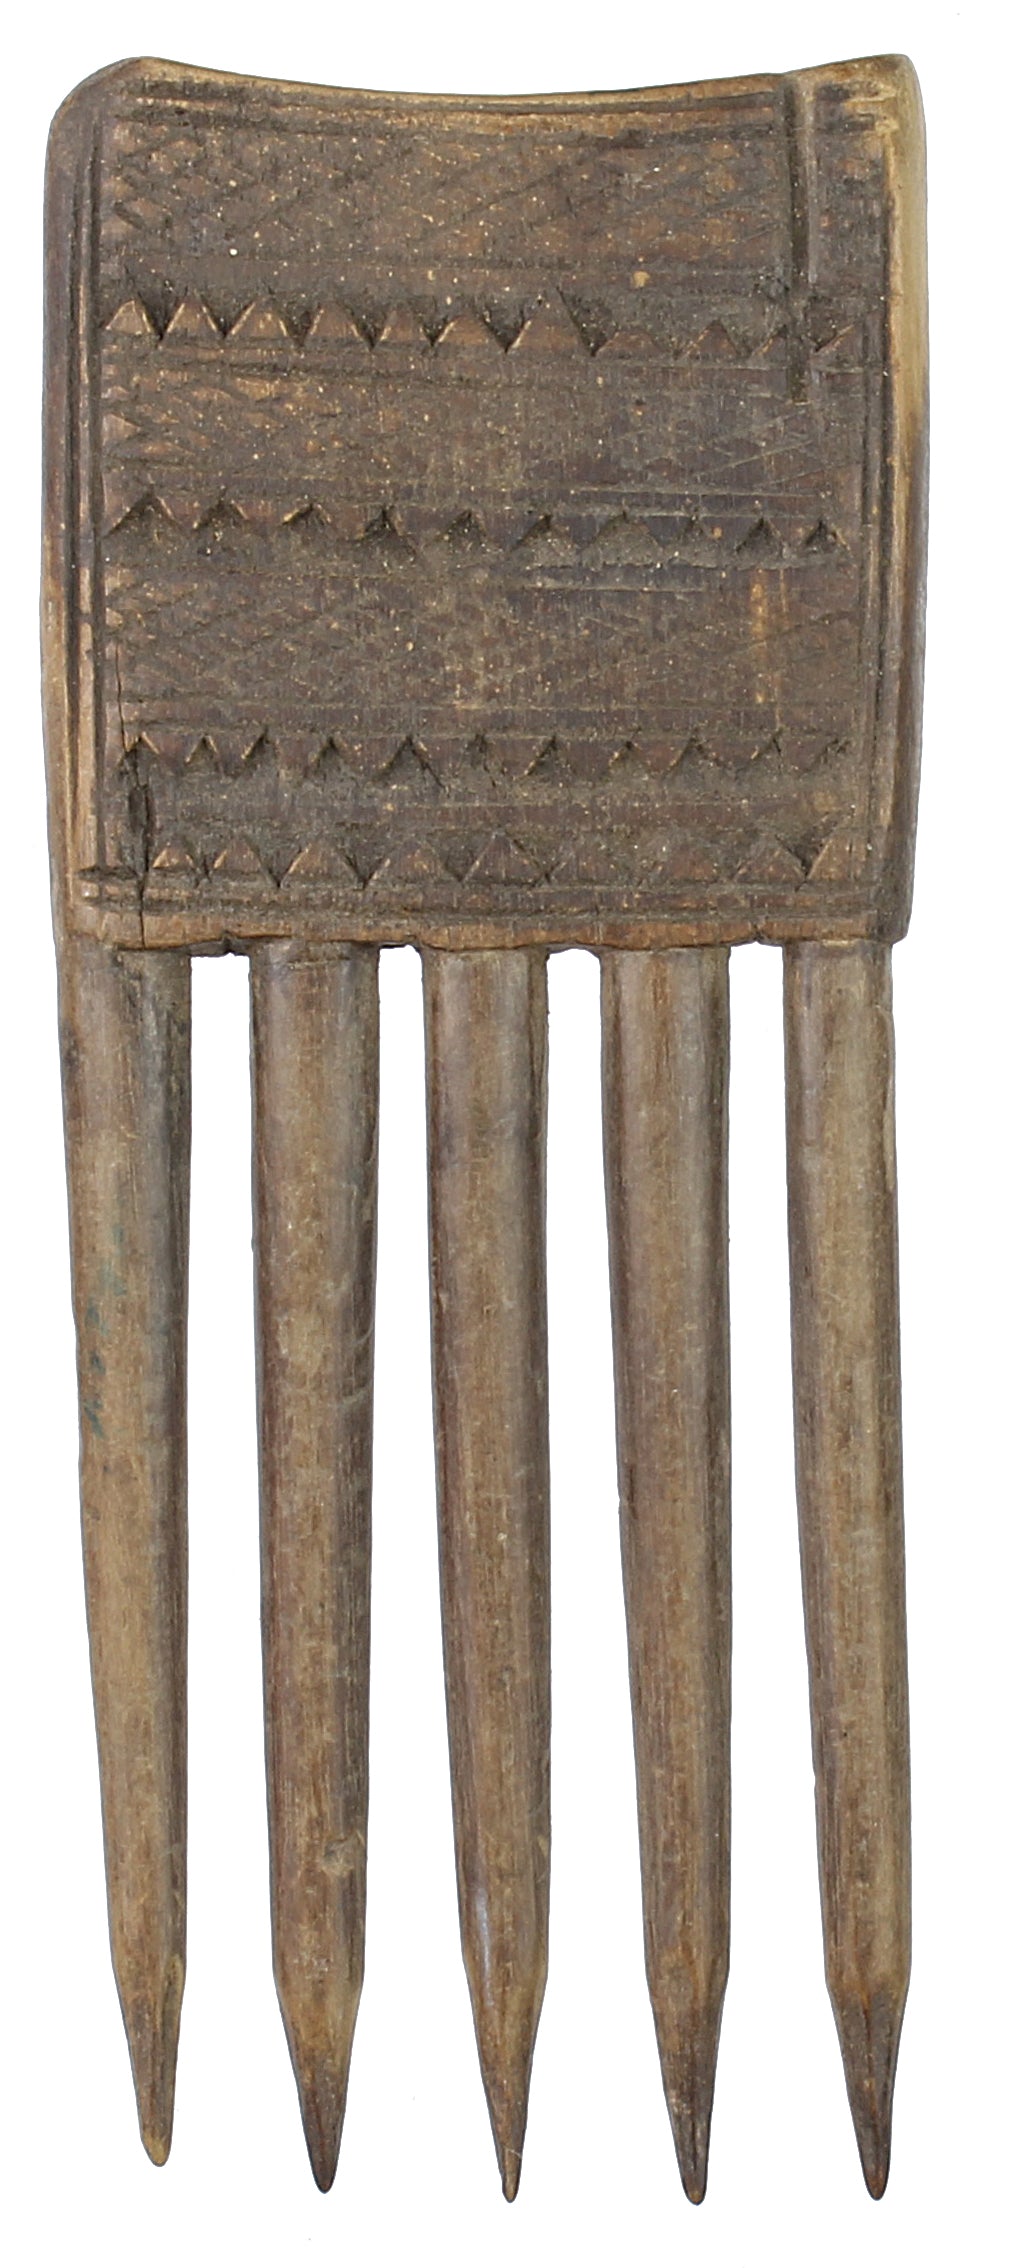 Vintage Baule Comb from Ivory Coast - 5.75" x 2.2" - Niger Bend